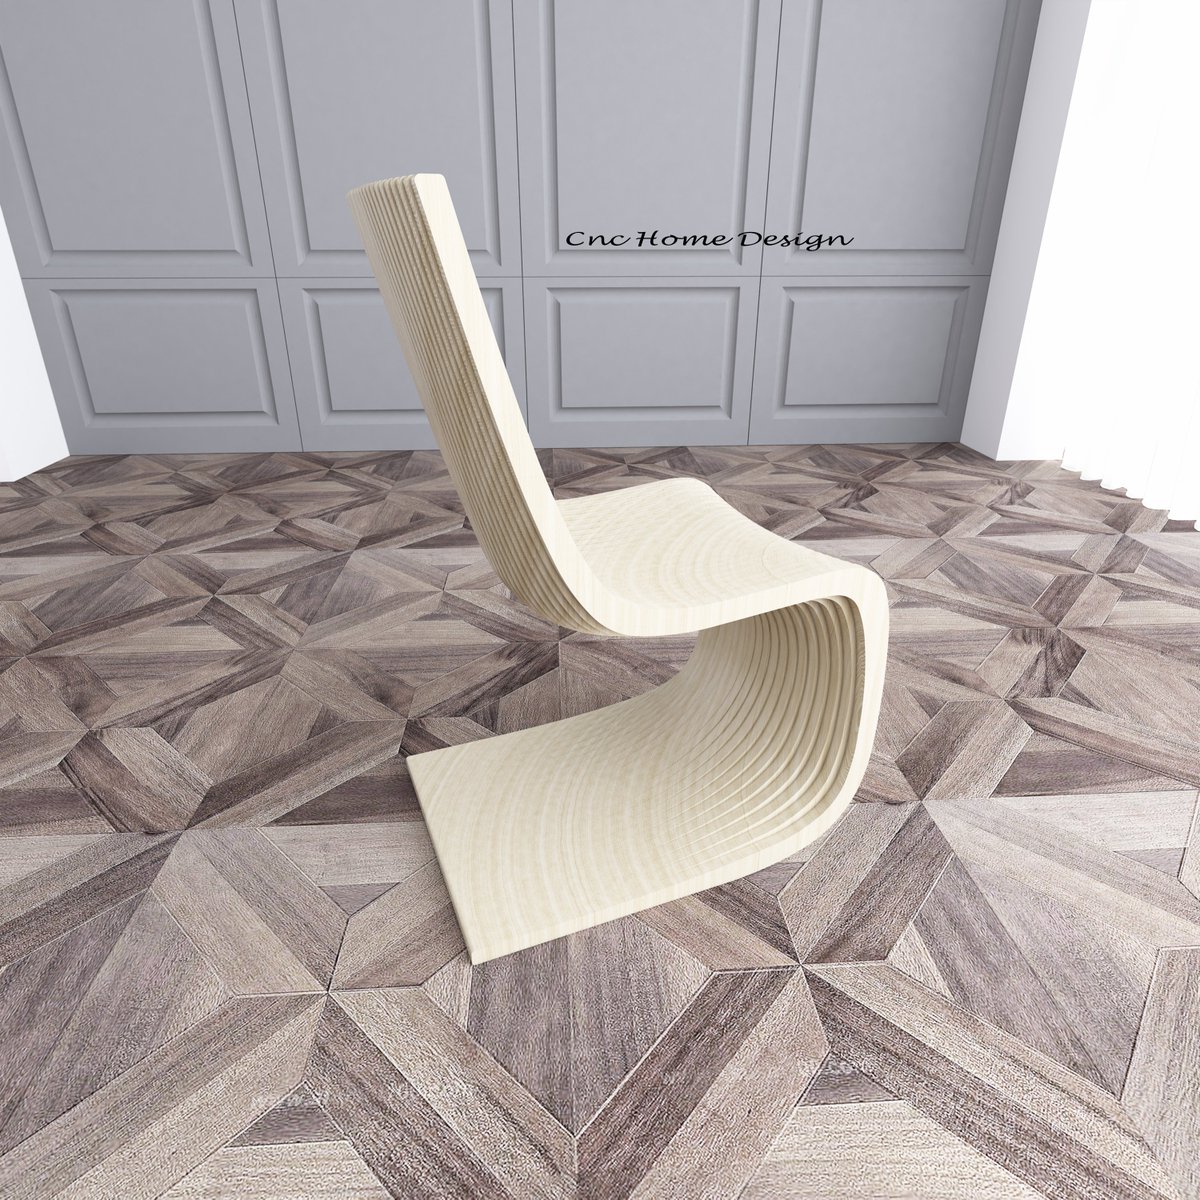 Parametric_Chair-015
Chair Size
Width 450
Depth 613
Height 893
#parametric
#cncdesigner
#parametricart
#cnchomedesign
#parametricdesign
#parametric_design
#parametricfurniture
#plywoodfurniture
#furnituredesign
#cncwoodworking
#wooddesign
#furniture
#woodwork
#plywood